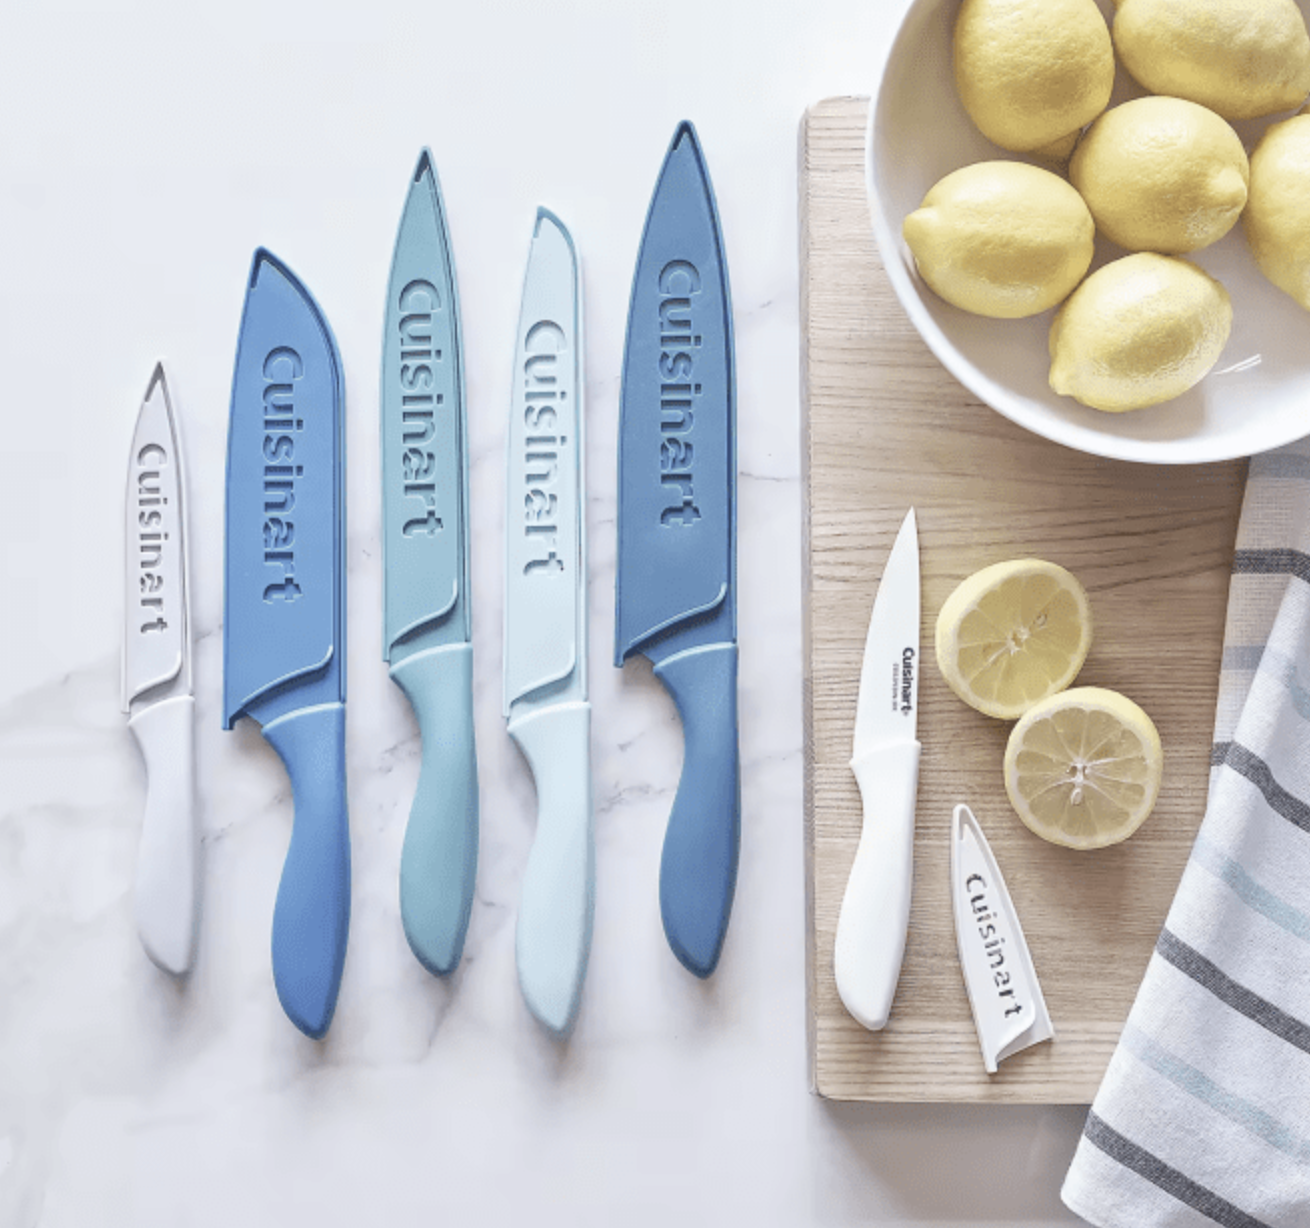 Cuisinart Advantage 6-Piece Ceramic-Coated Nautical Knife Set for